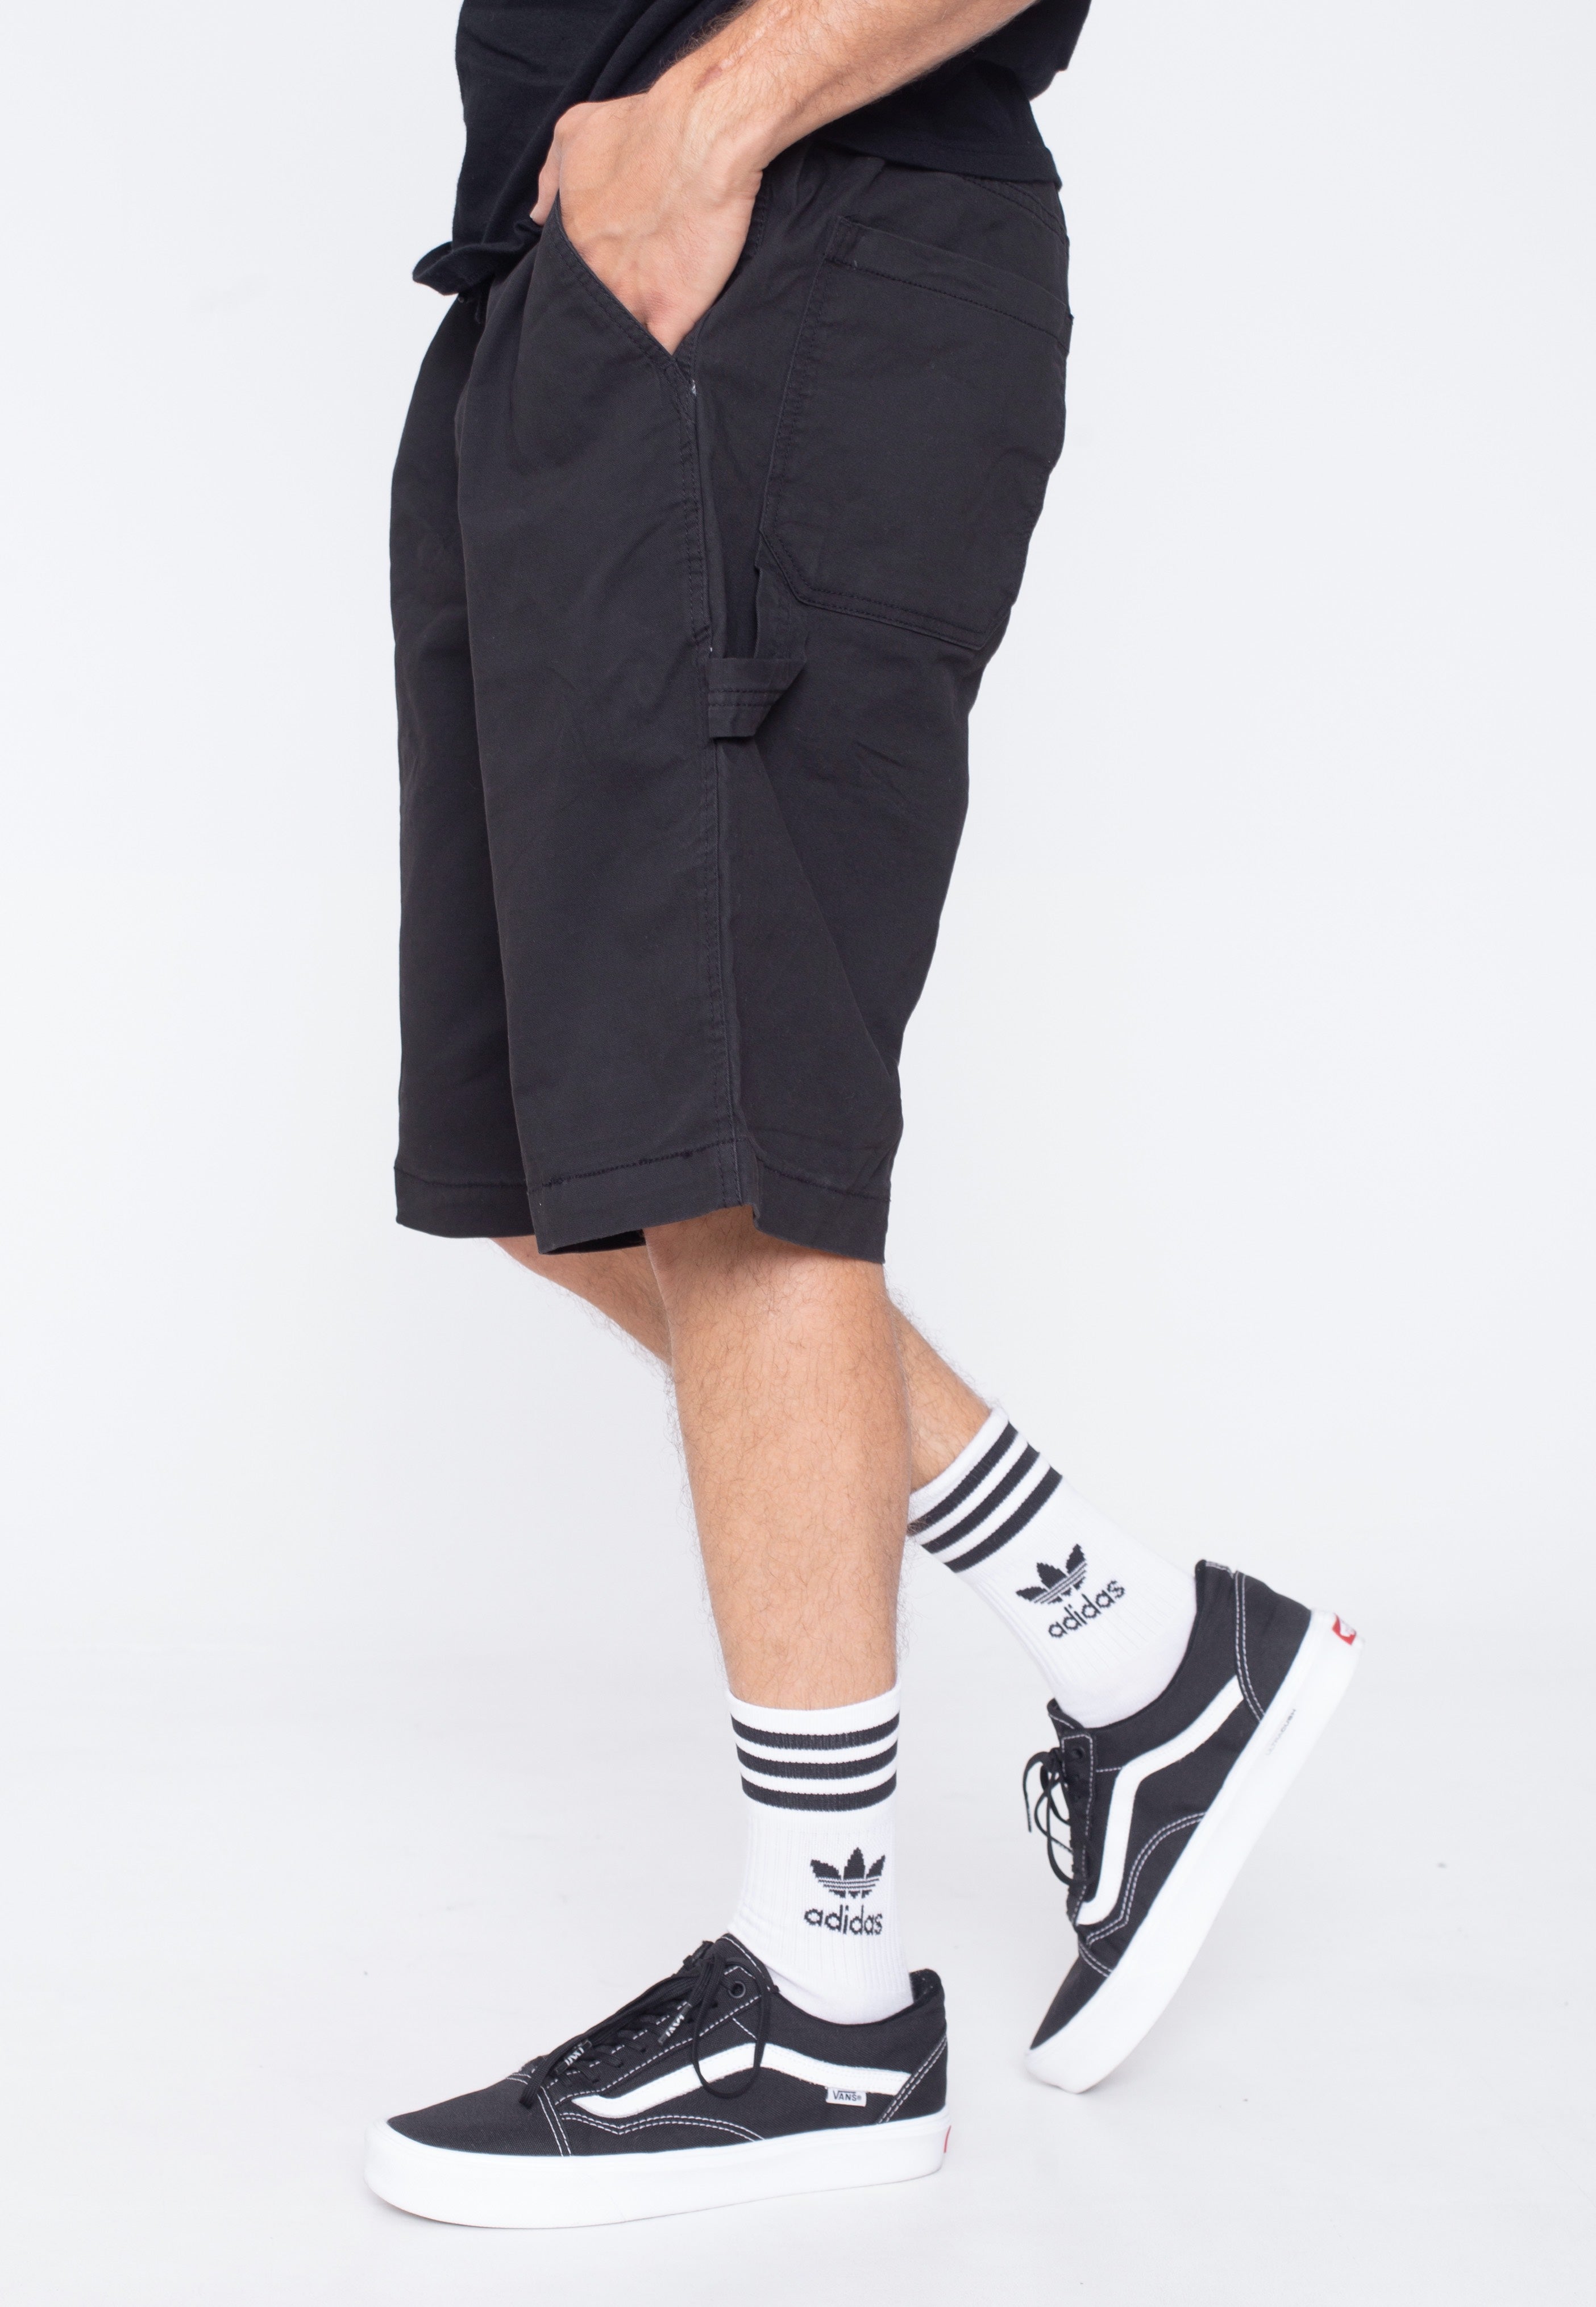 REELL - Reflex Hustler Black Canvas - Shorts